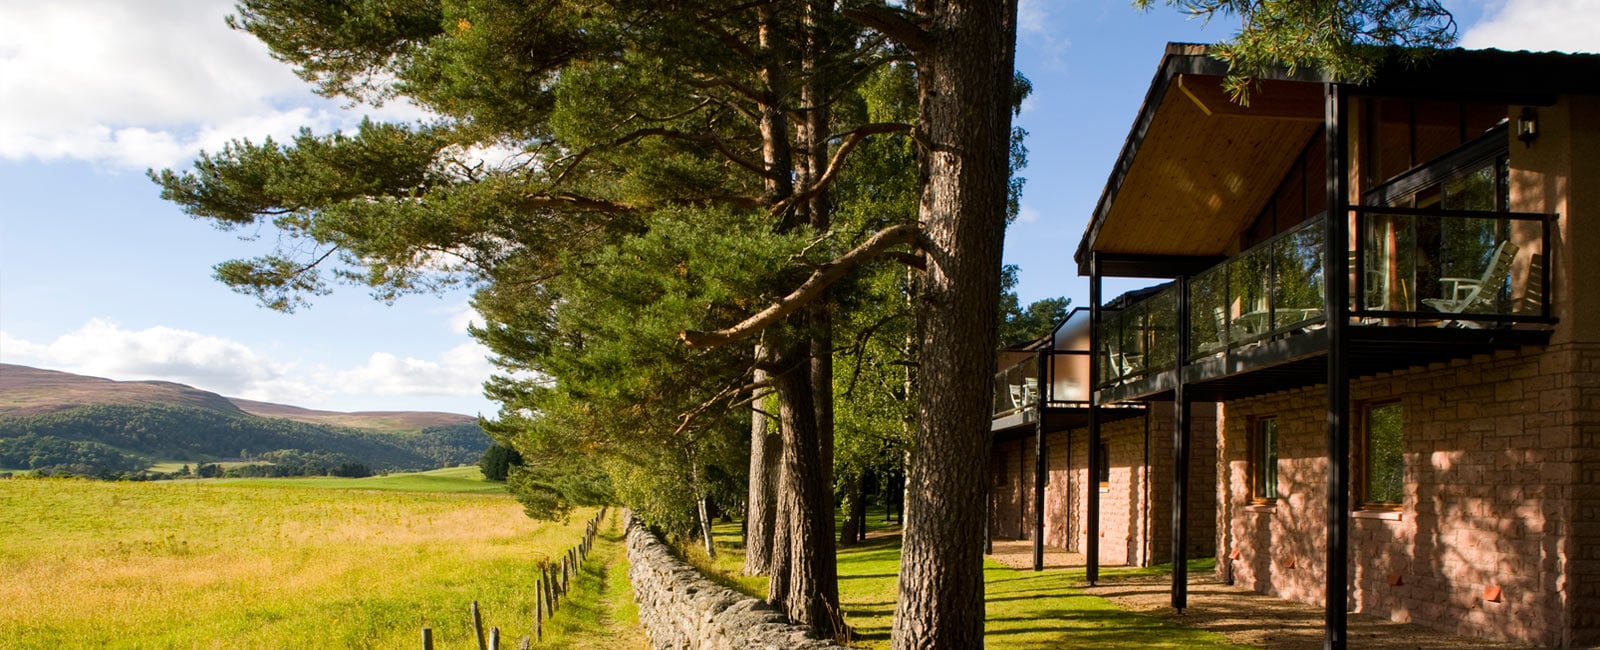 Exterior of Hilton Grand Vacations Club at Craigendarroch Lodges in Royal Deeside, Scotland